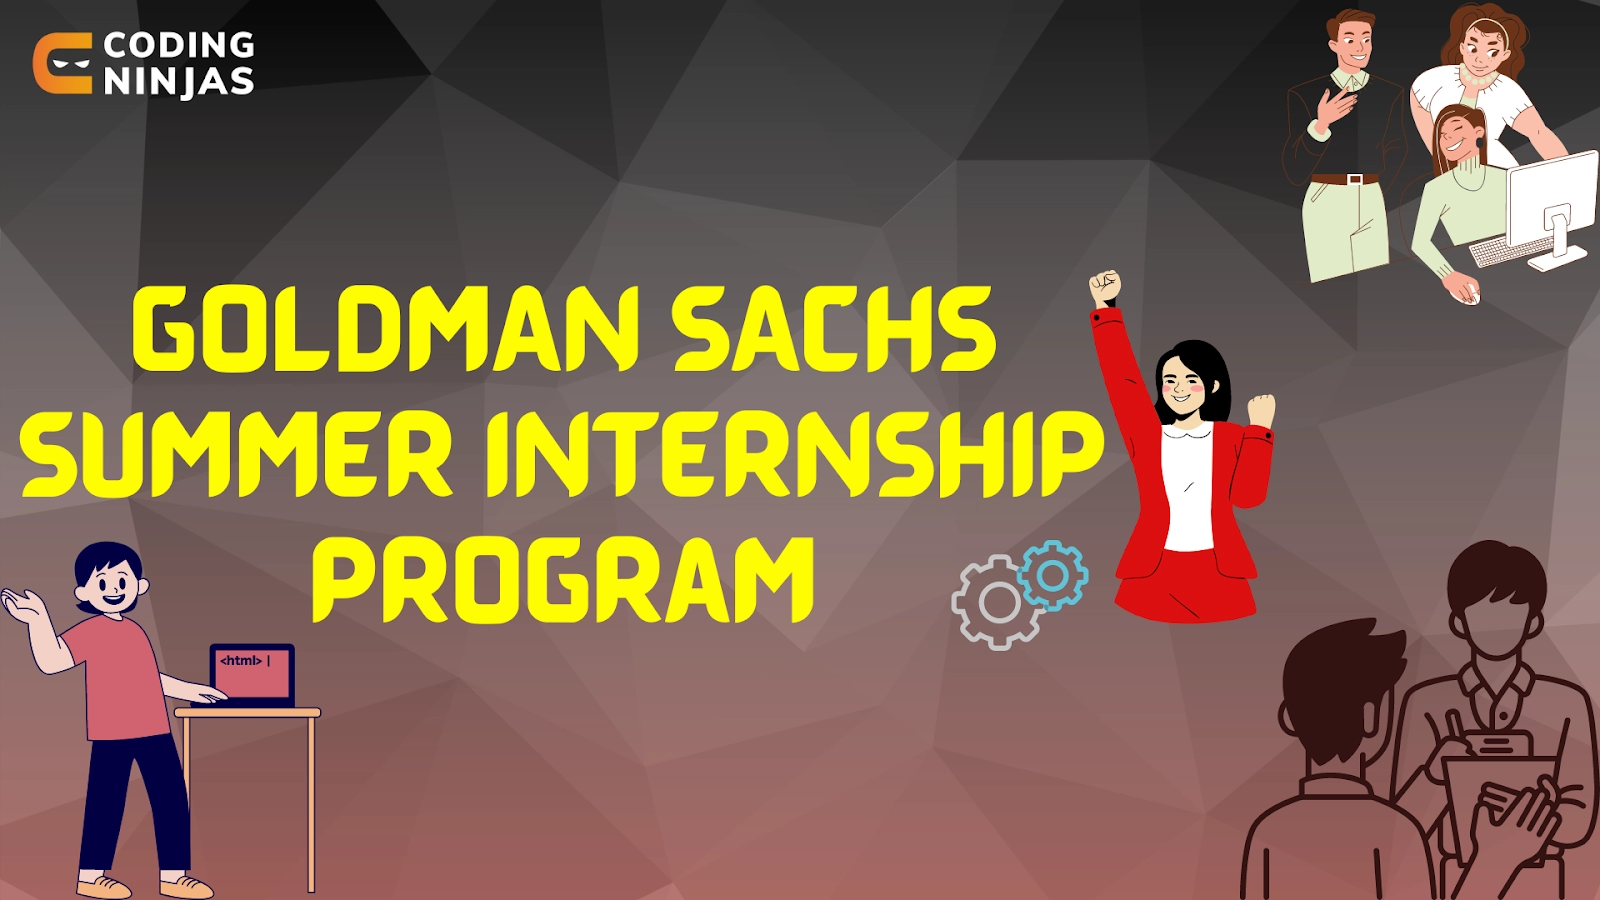 goldman-sachs-summer-internship-program-coding-ninjas